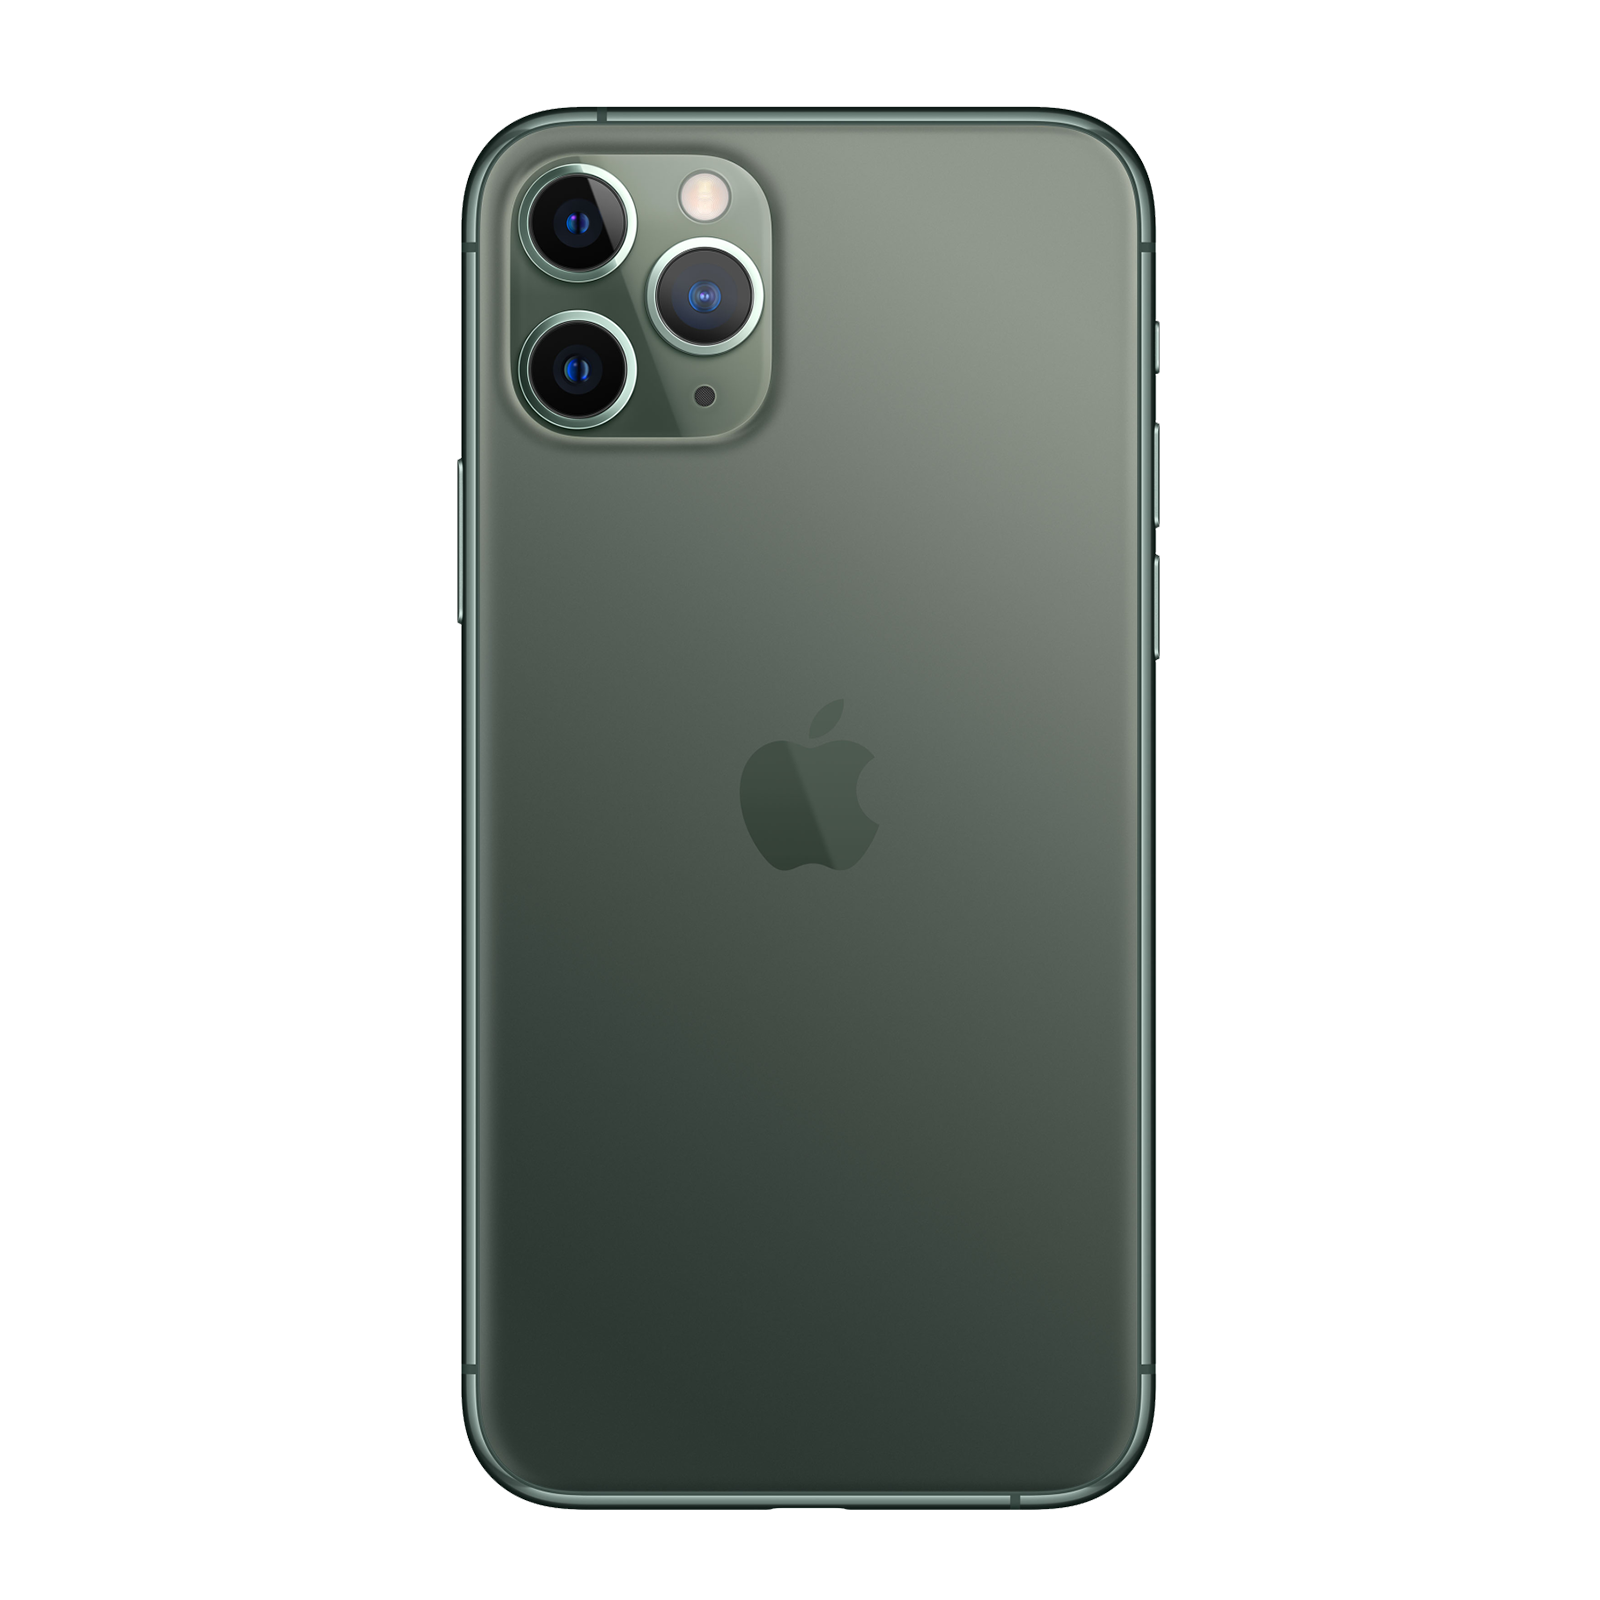 Apple iPhone 11 Pro Max 64GB Midnight Green Fair - Unlocked